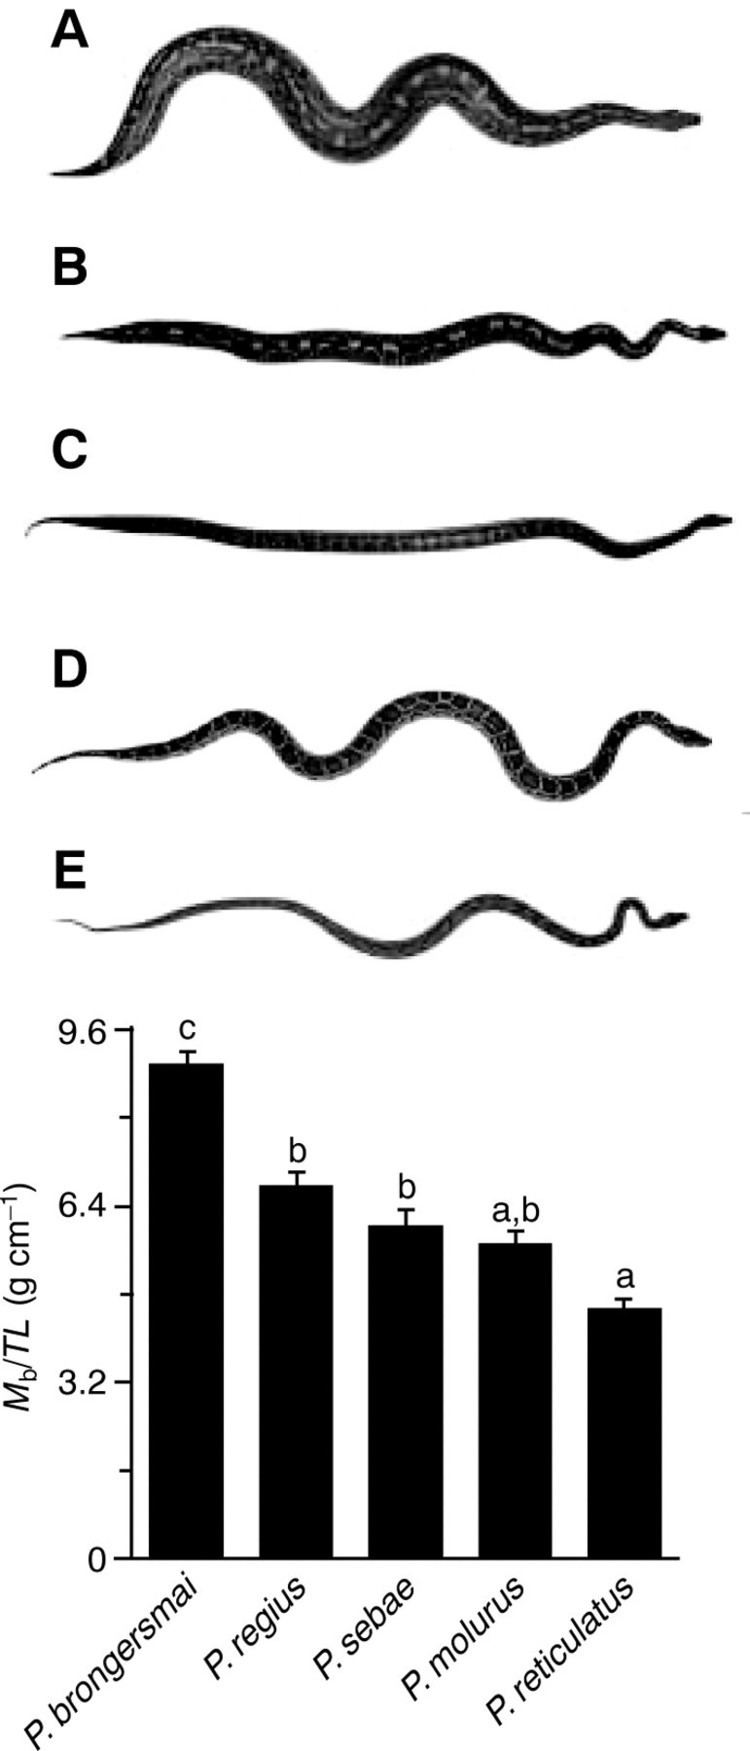 Python (genus) Adaptive regulation of digestive performance in the genus Python